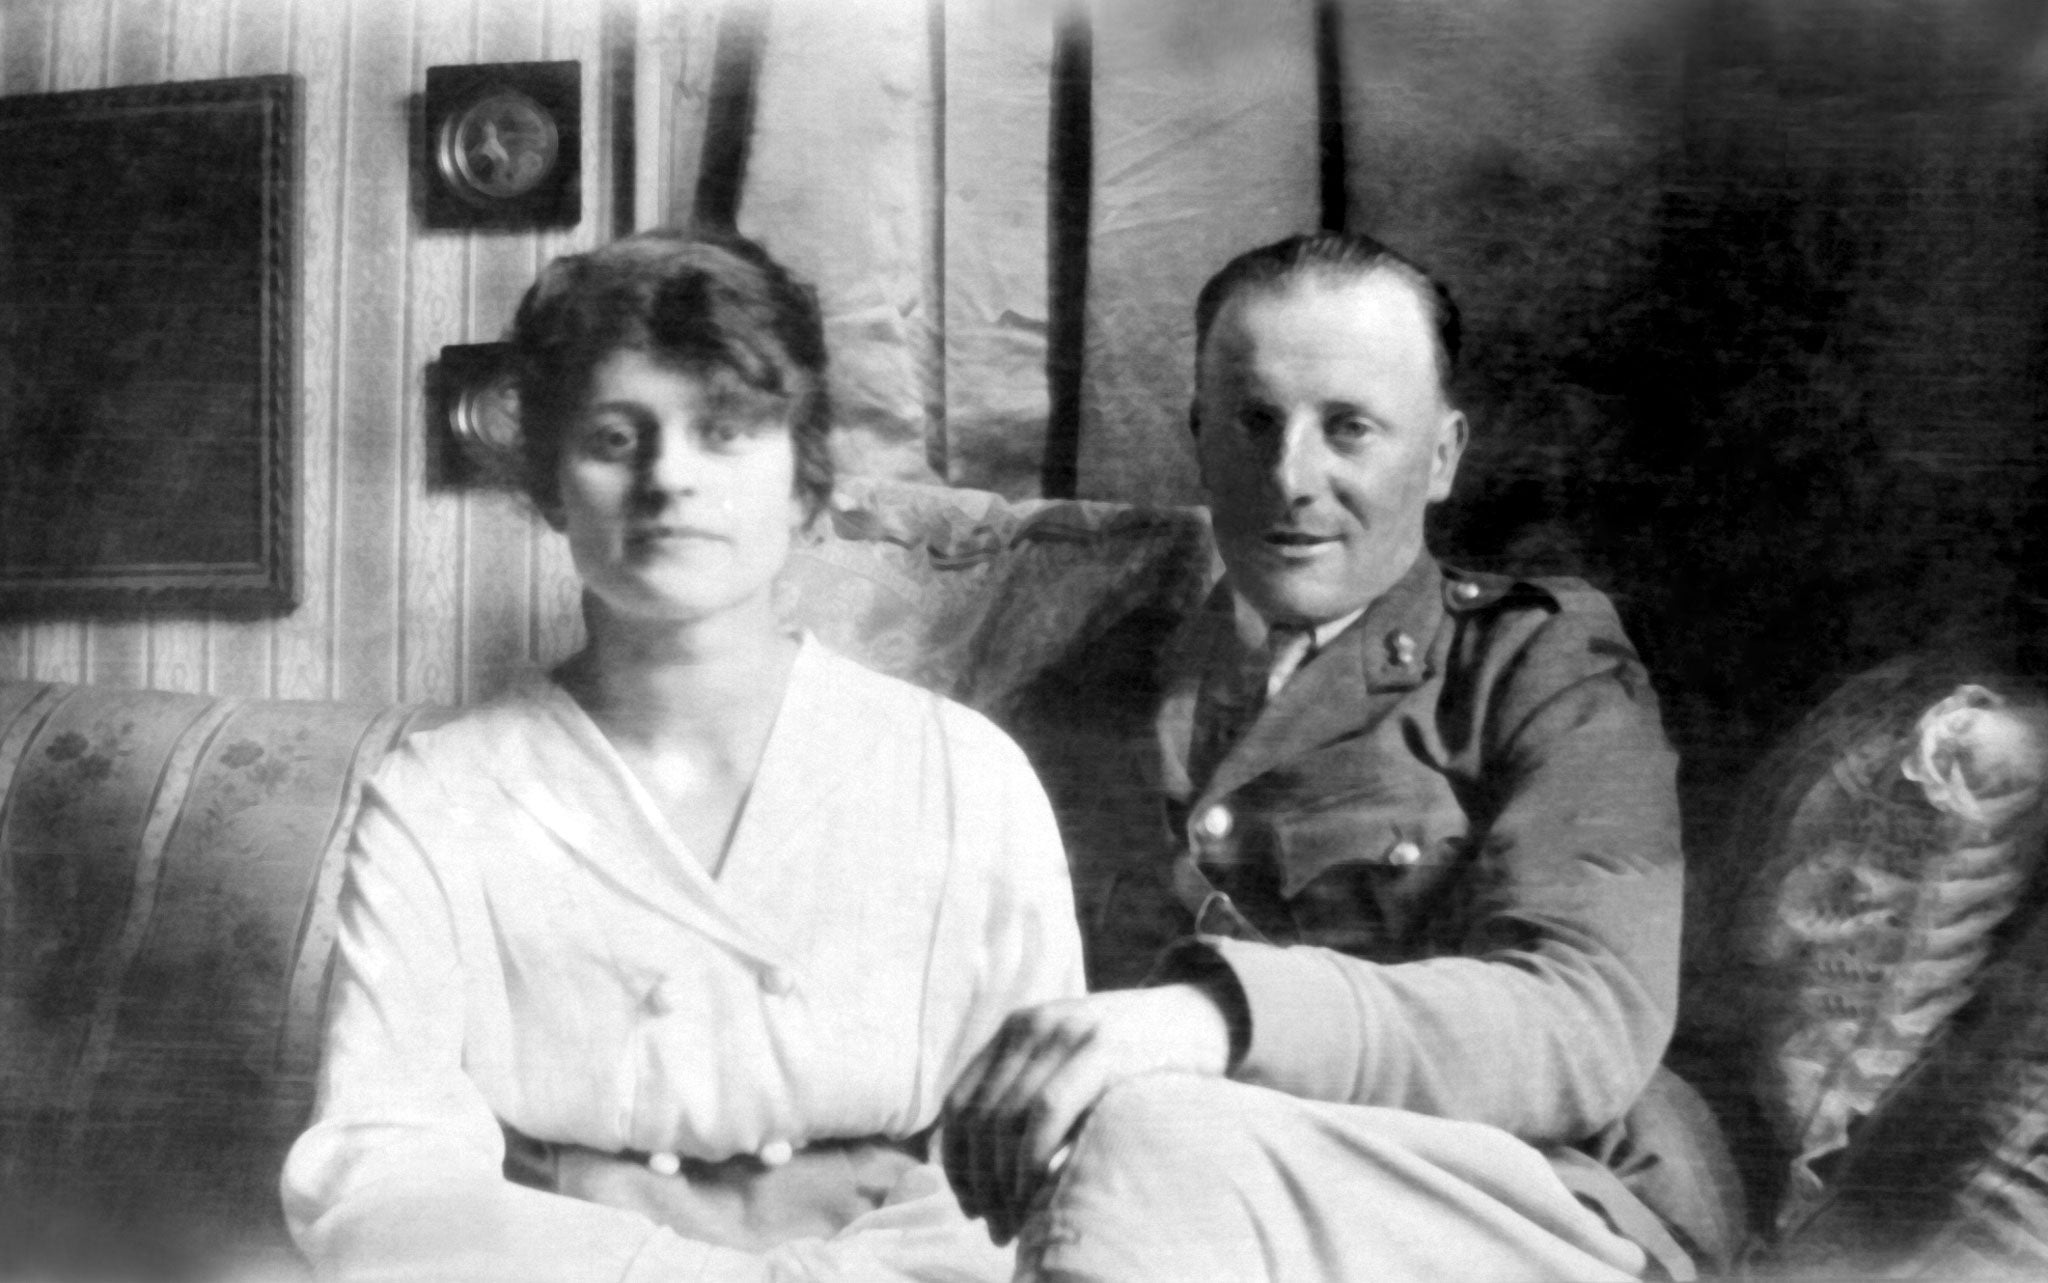 Lieutenant William Morgan and his French girlfriend Renée